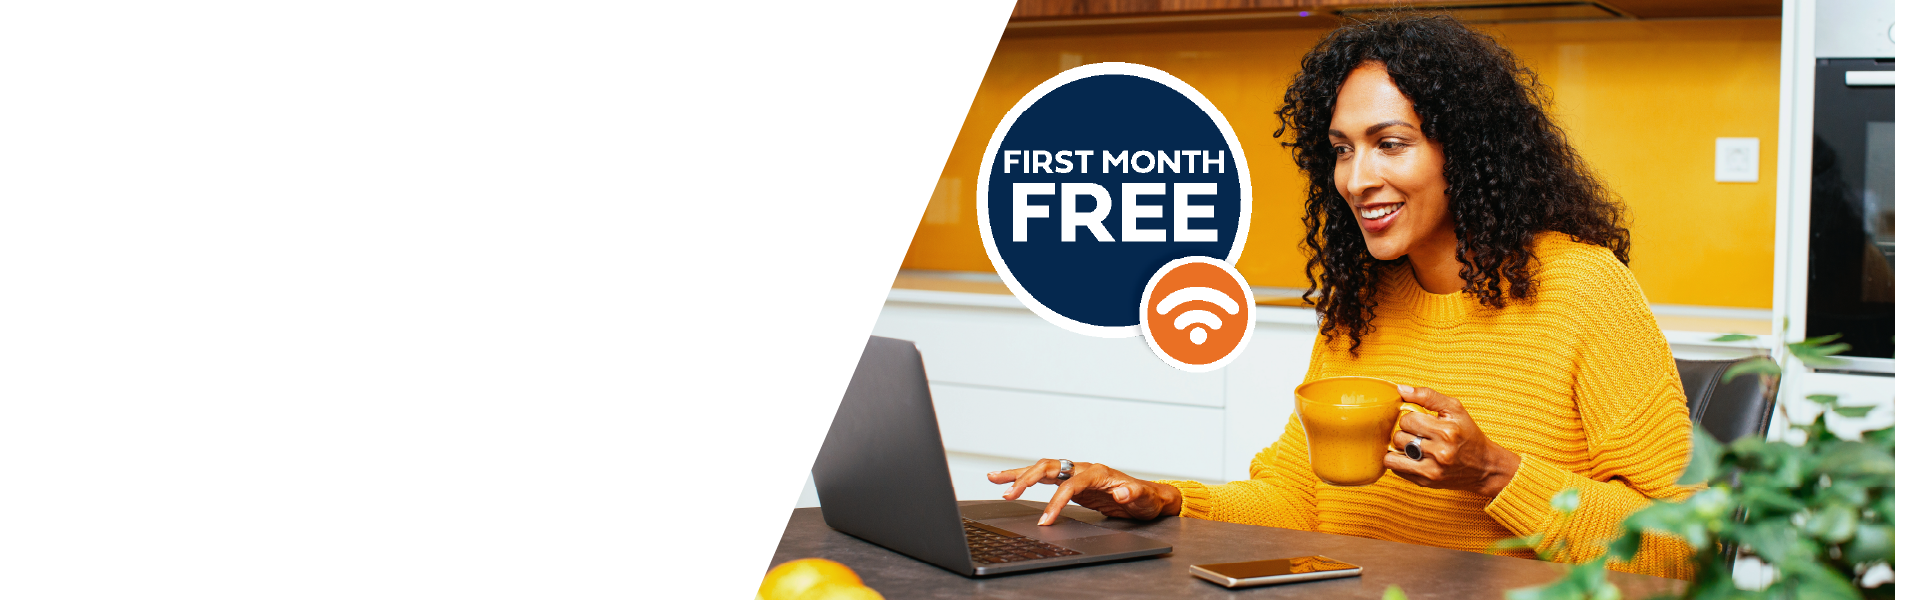 Free First Month Internet